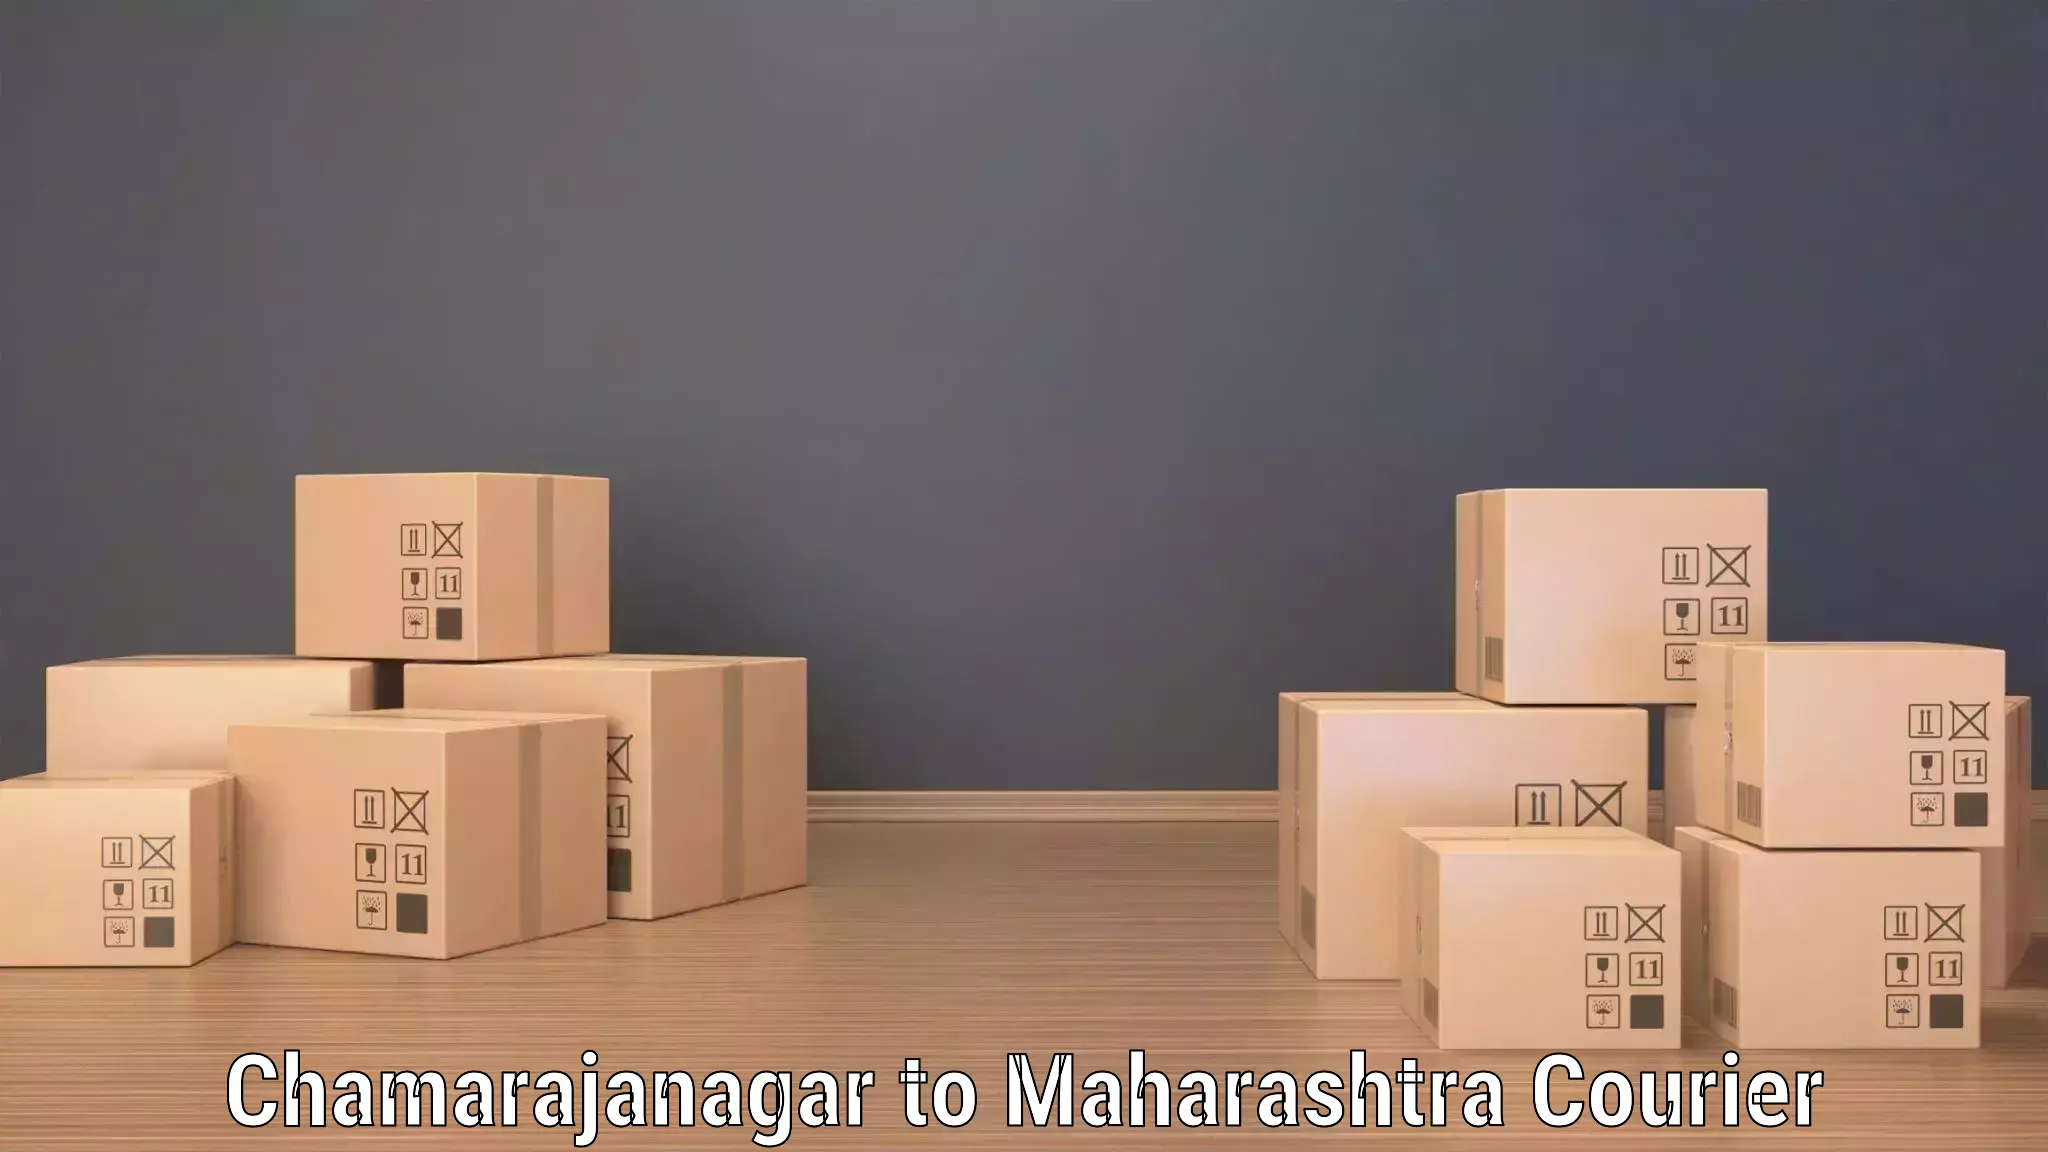 Courier service booking Chamarajanagar to Tata Institute of Social Sciences Mumbai